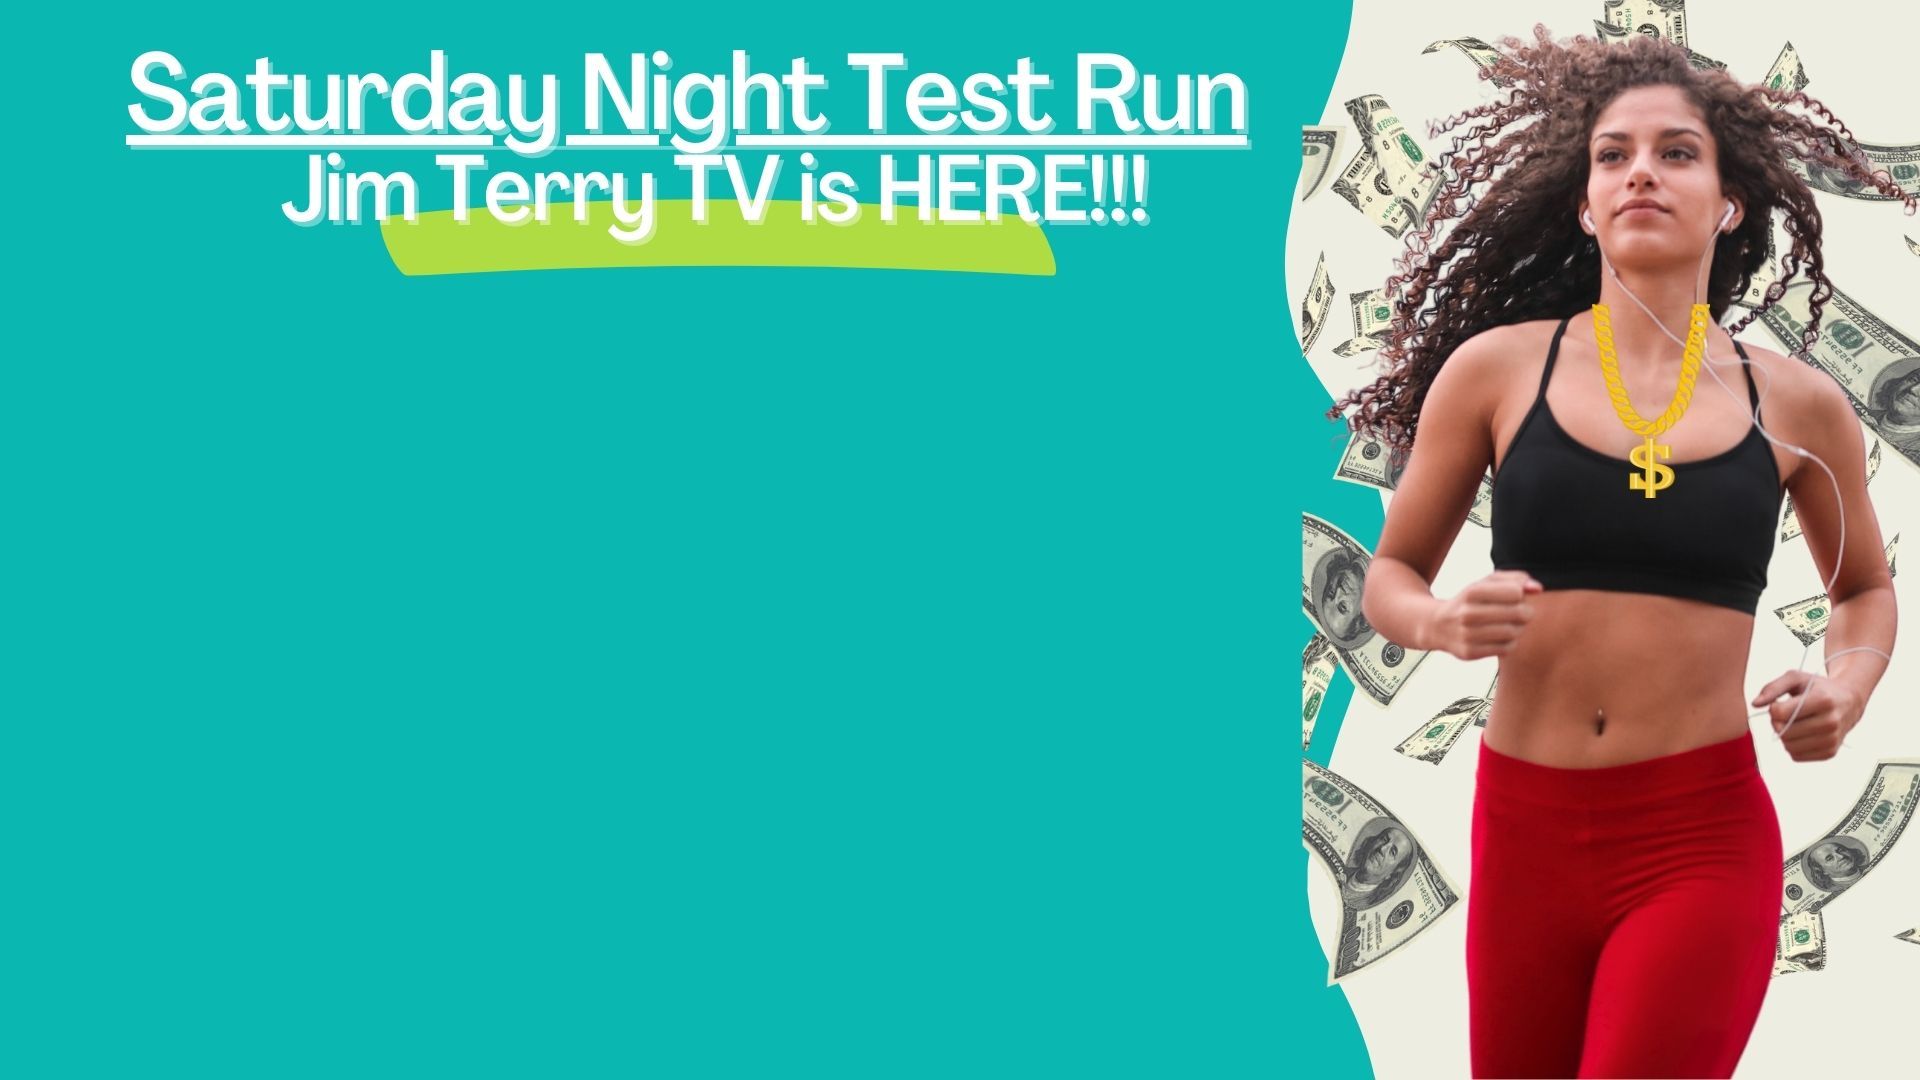 Jim Terry TV's Saturday Night Test Run 